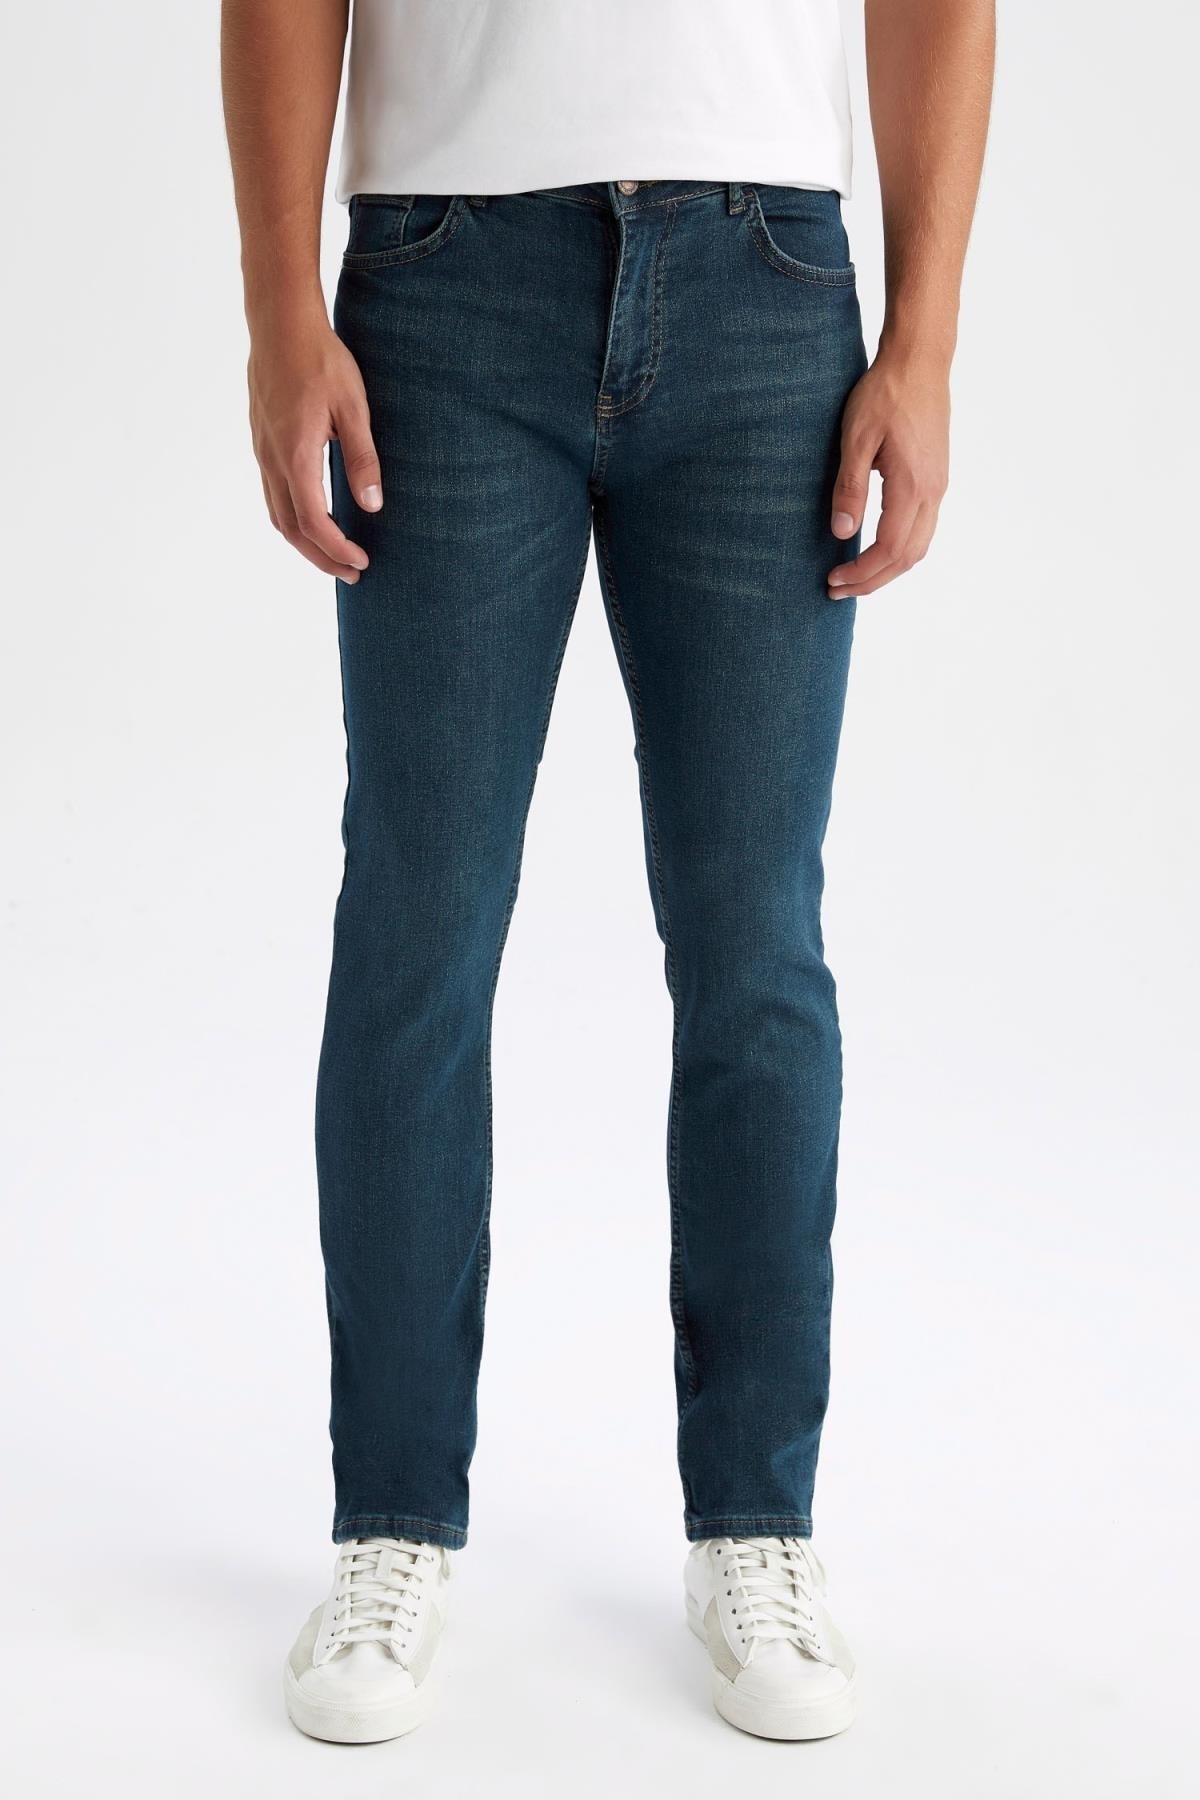 DeFacto Jeans Grün Straight Fast ausverkauft